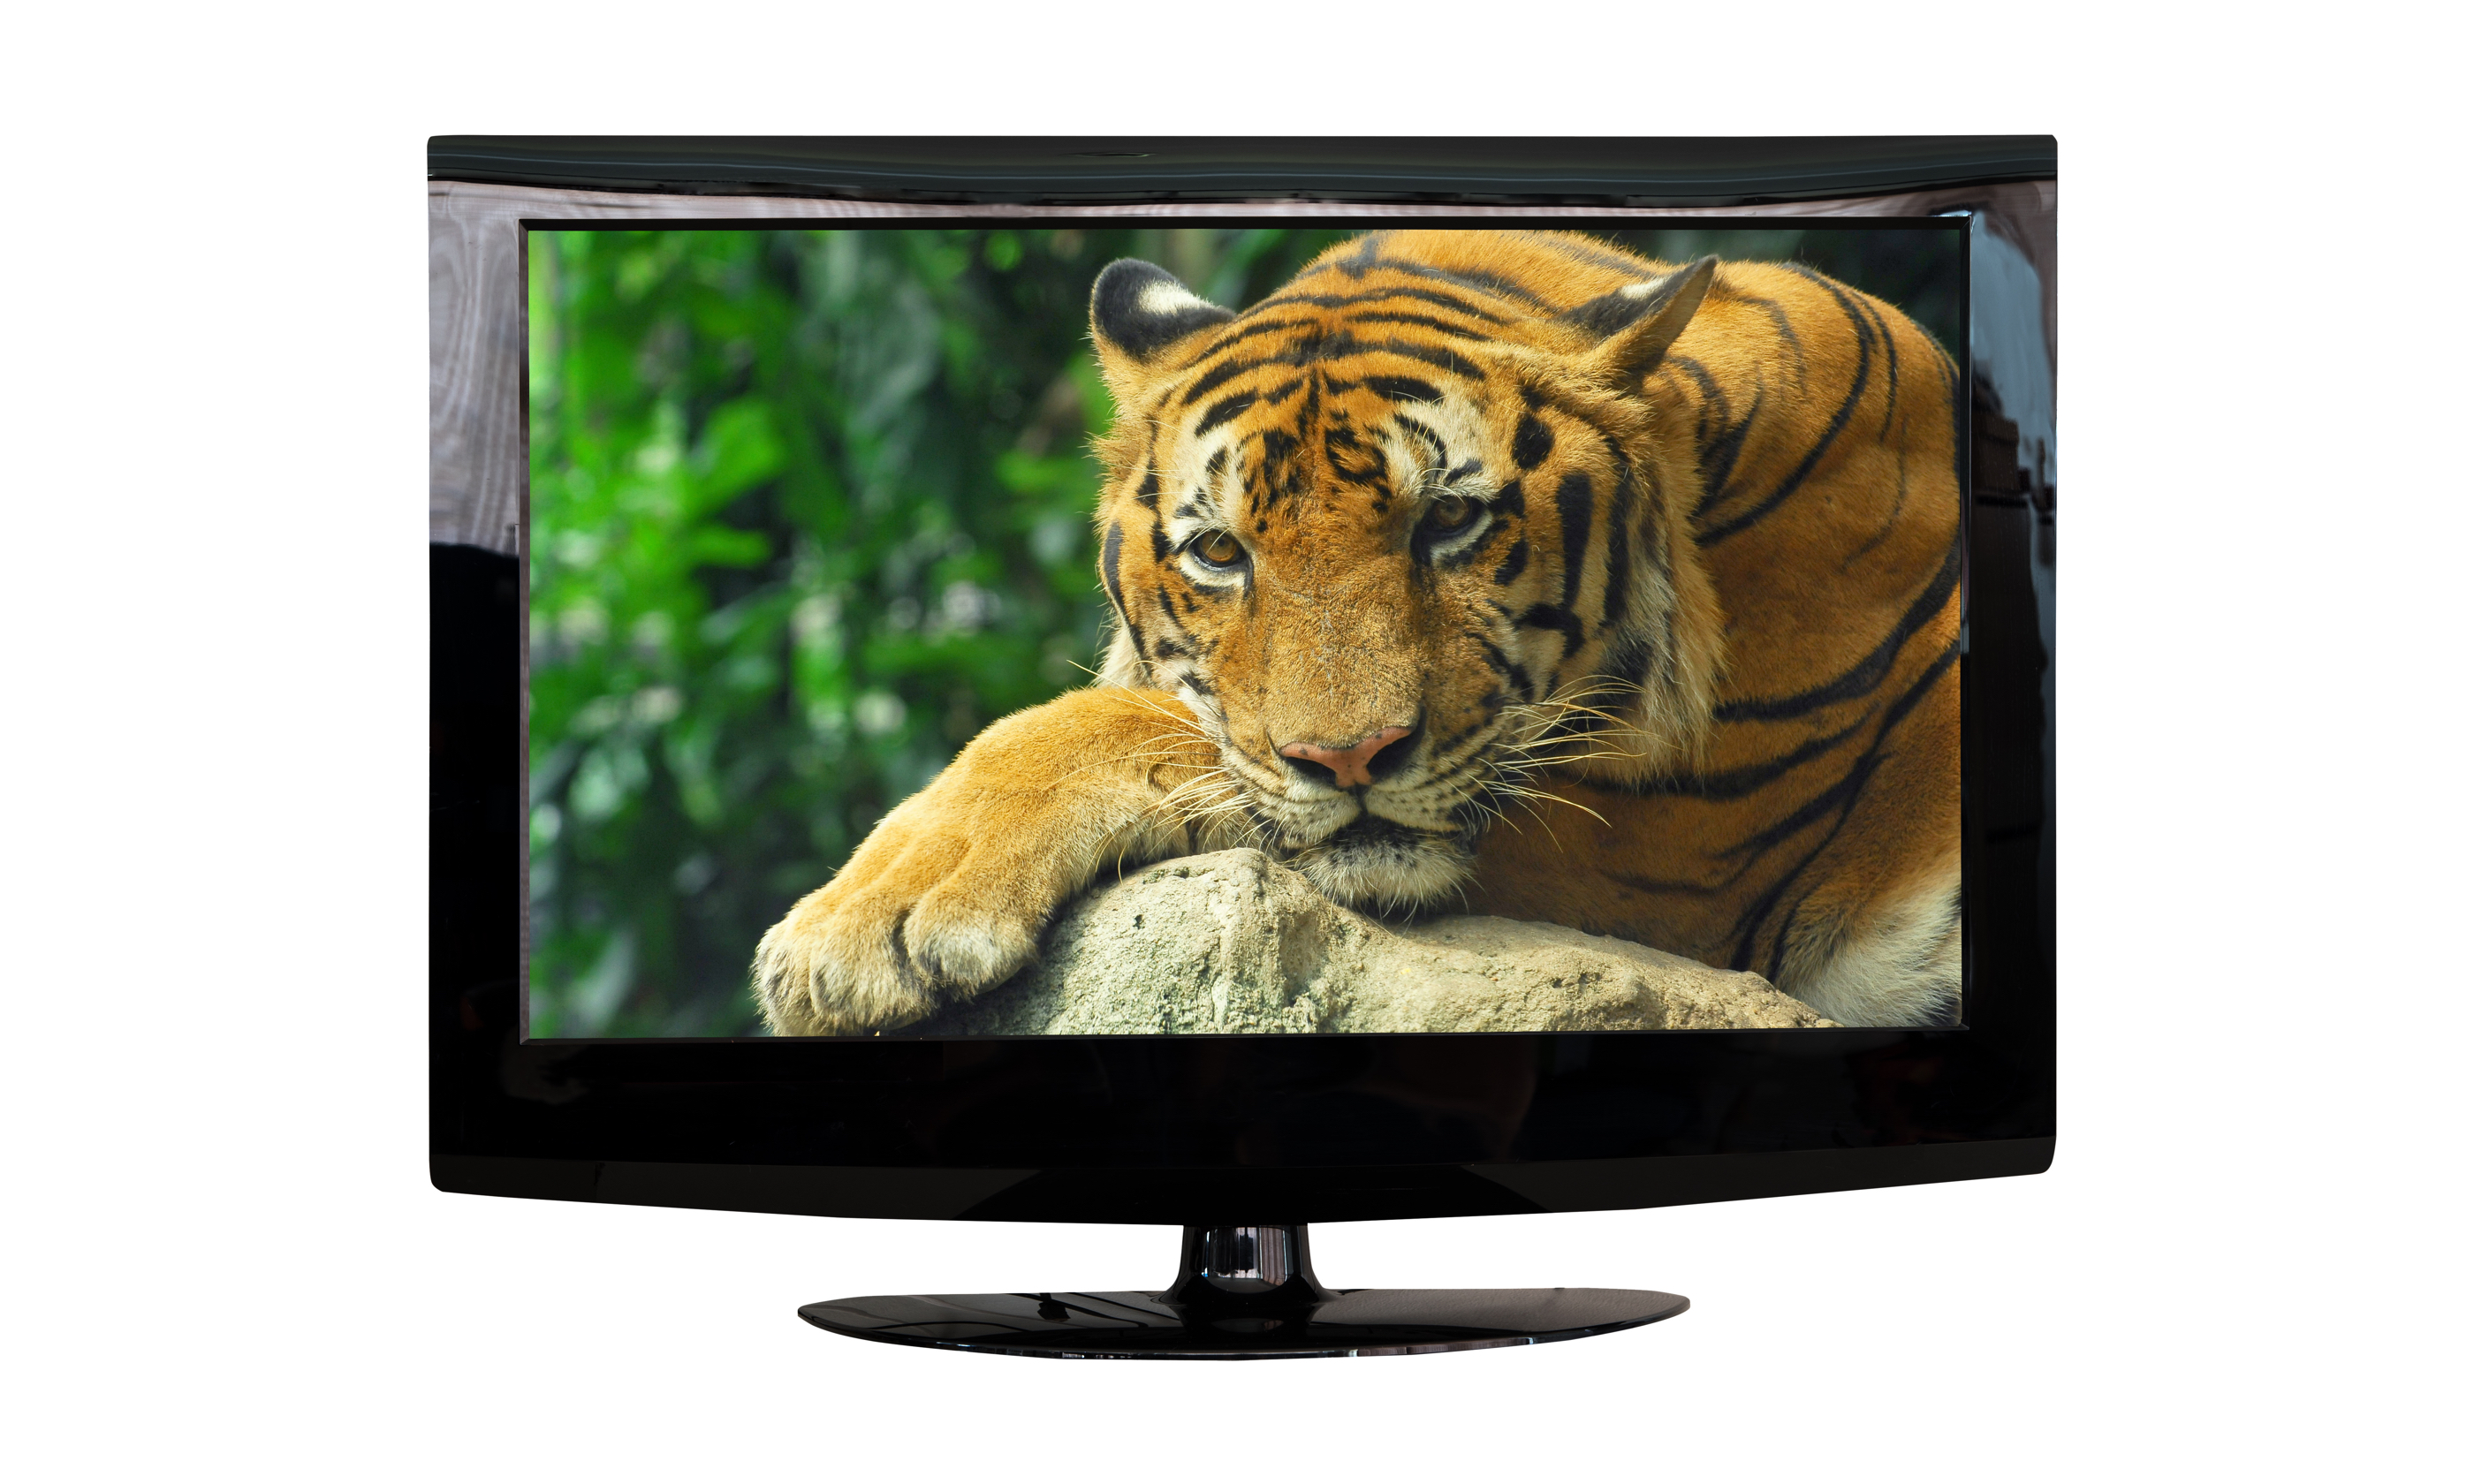 Tiger on TV (Shutterstock.com. See main credit below)